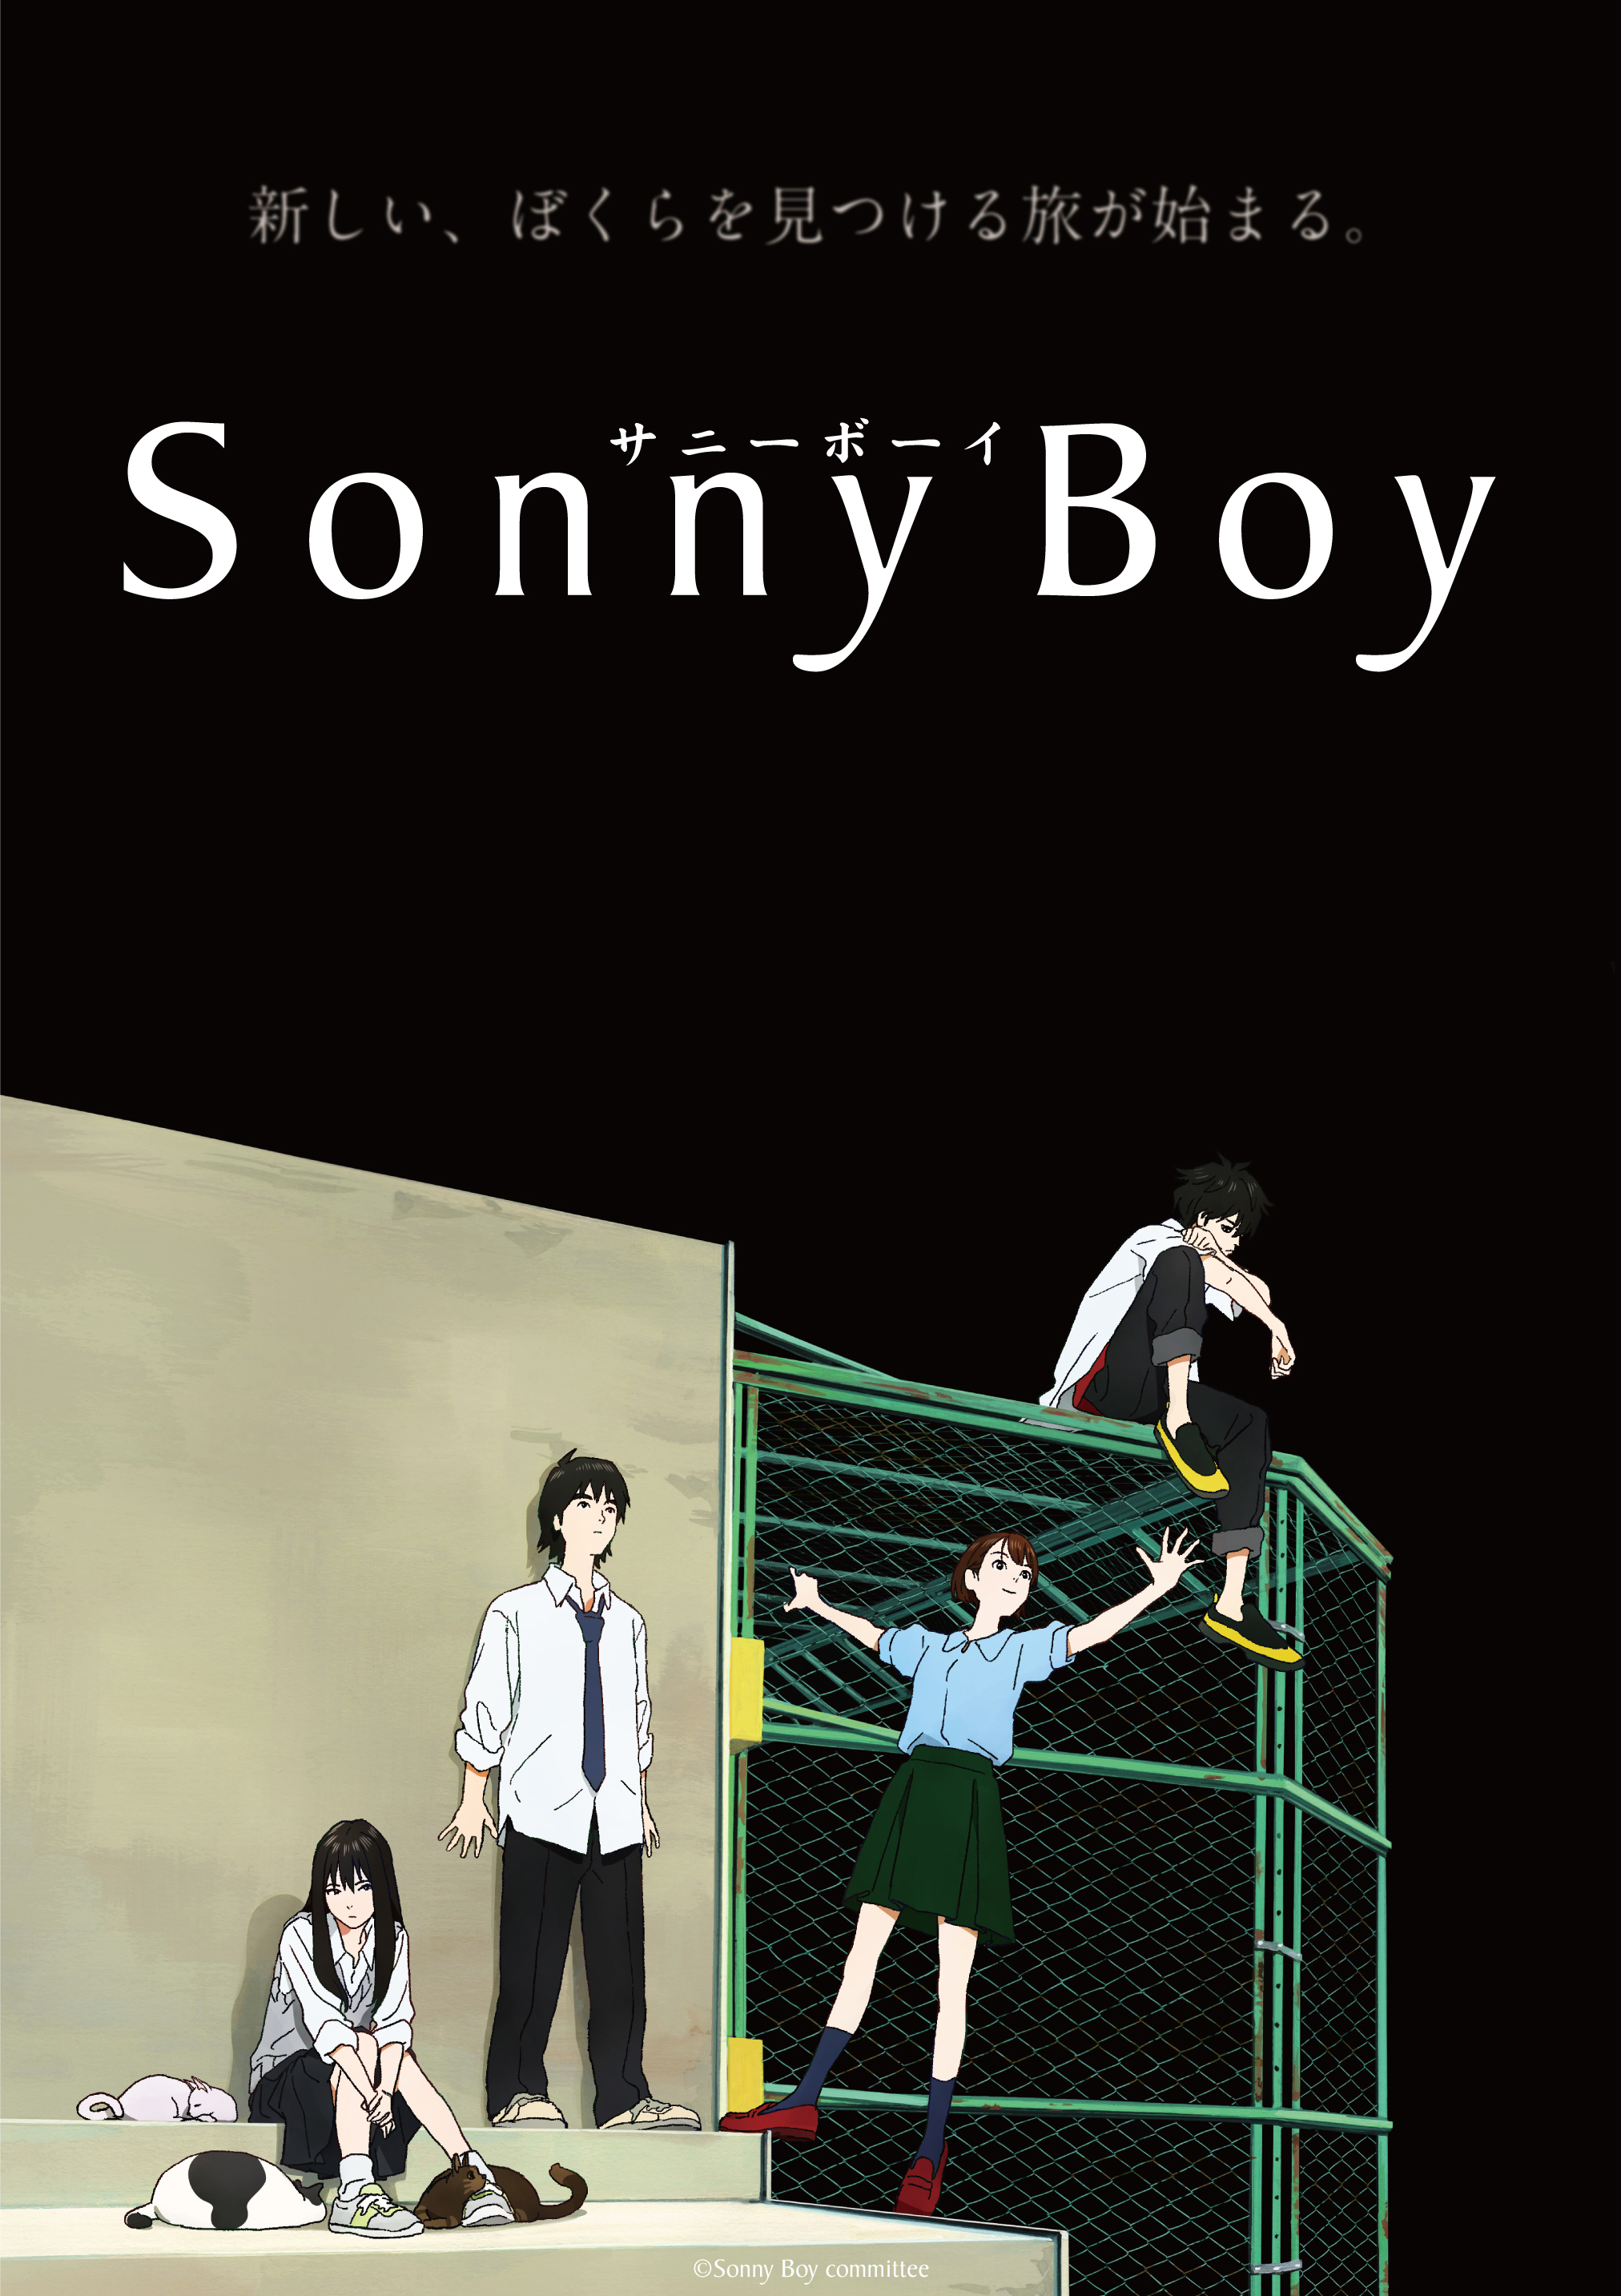  (C) Sonny Boy committee